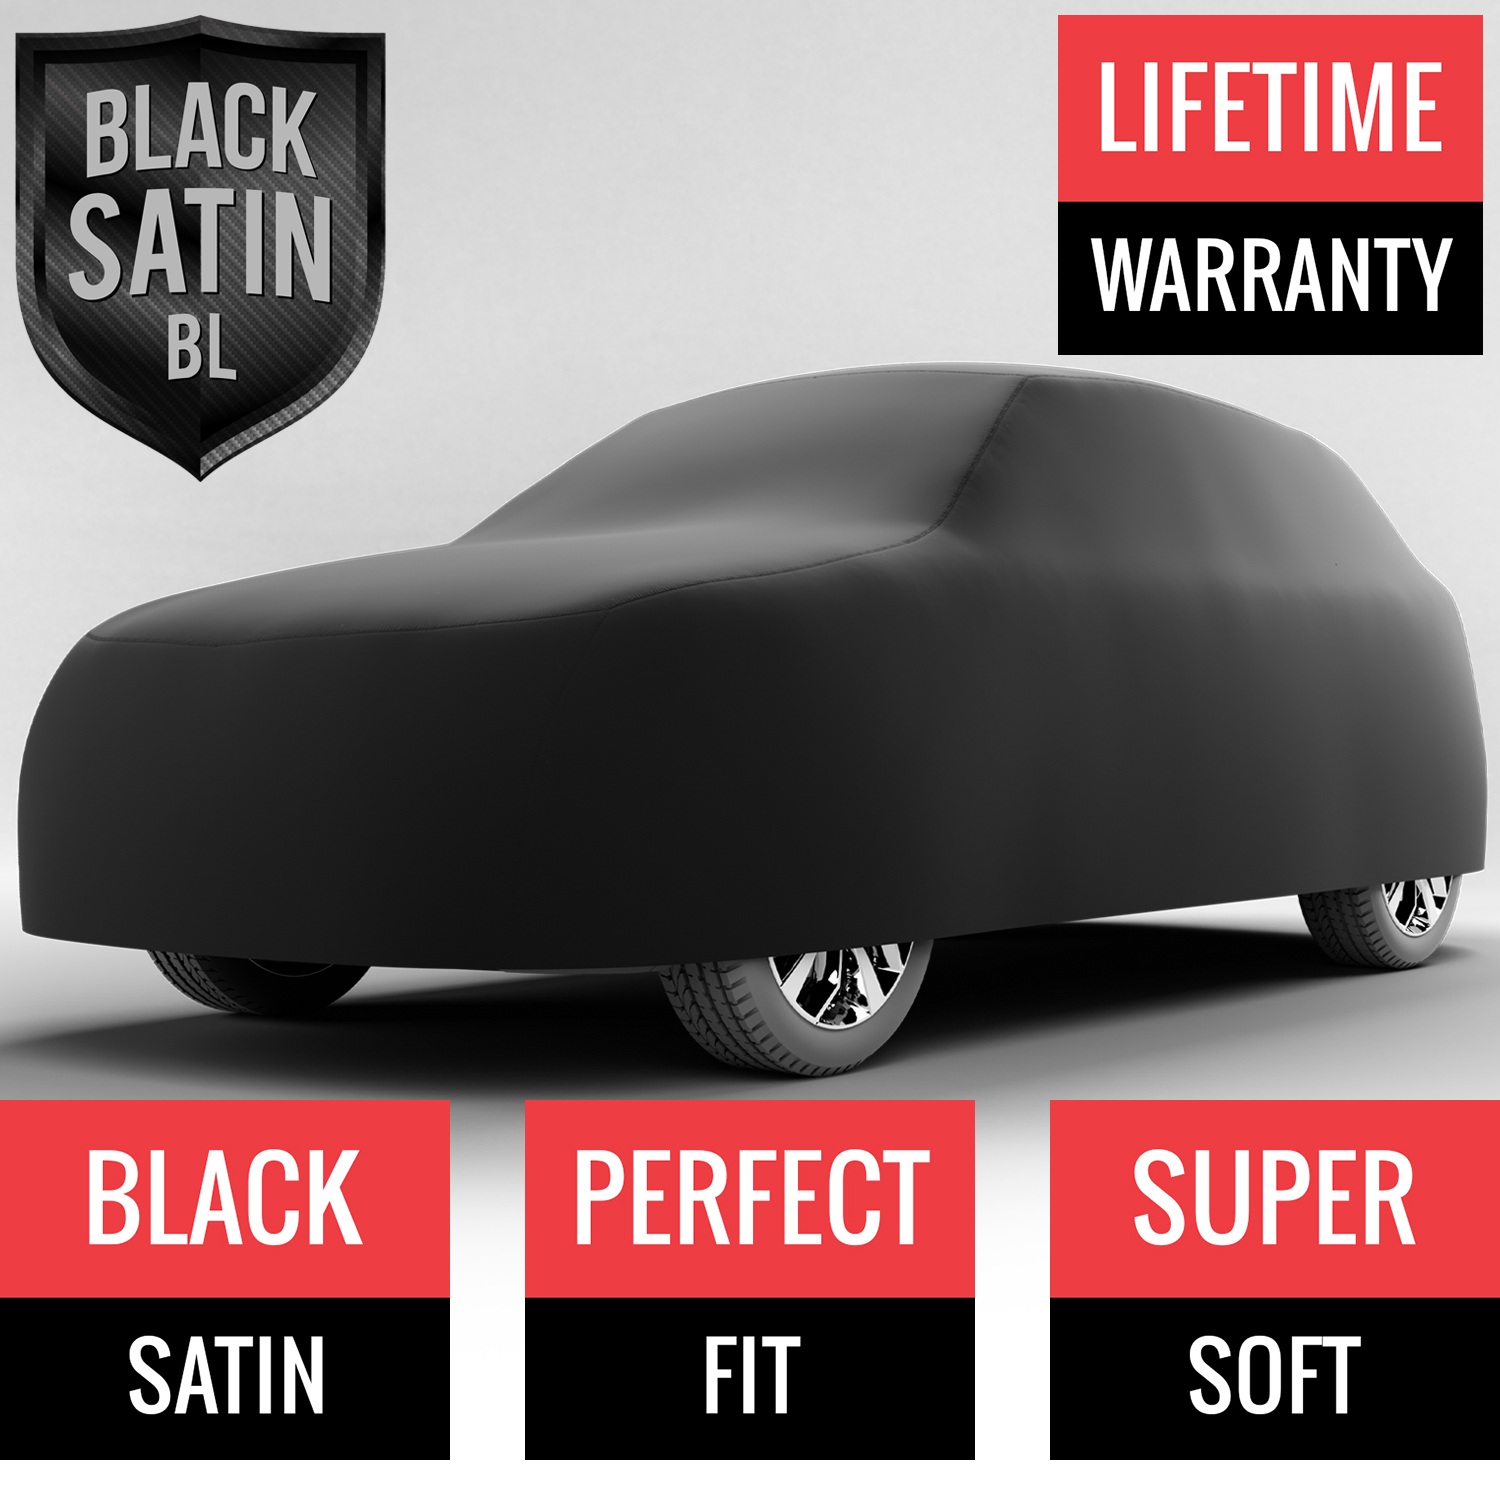 Black Satin BL - Black Car Cover for Scion xB 2014 Wagon 4-Door